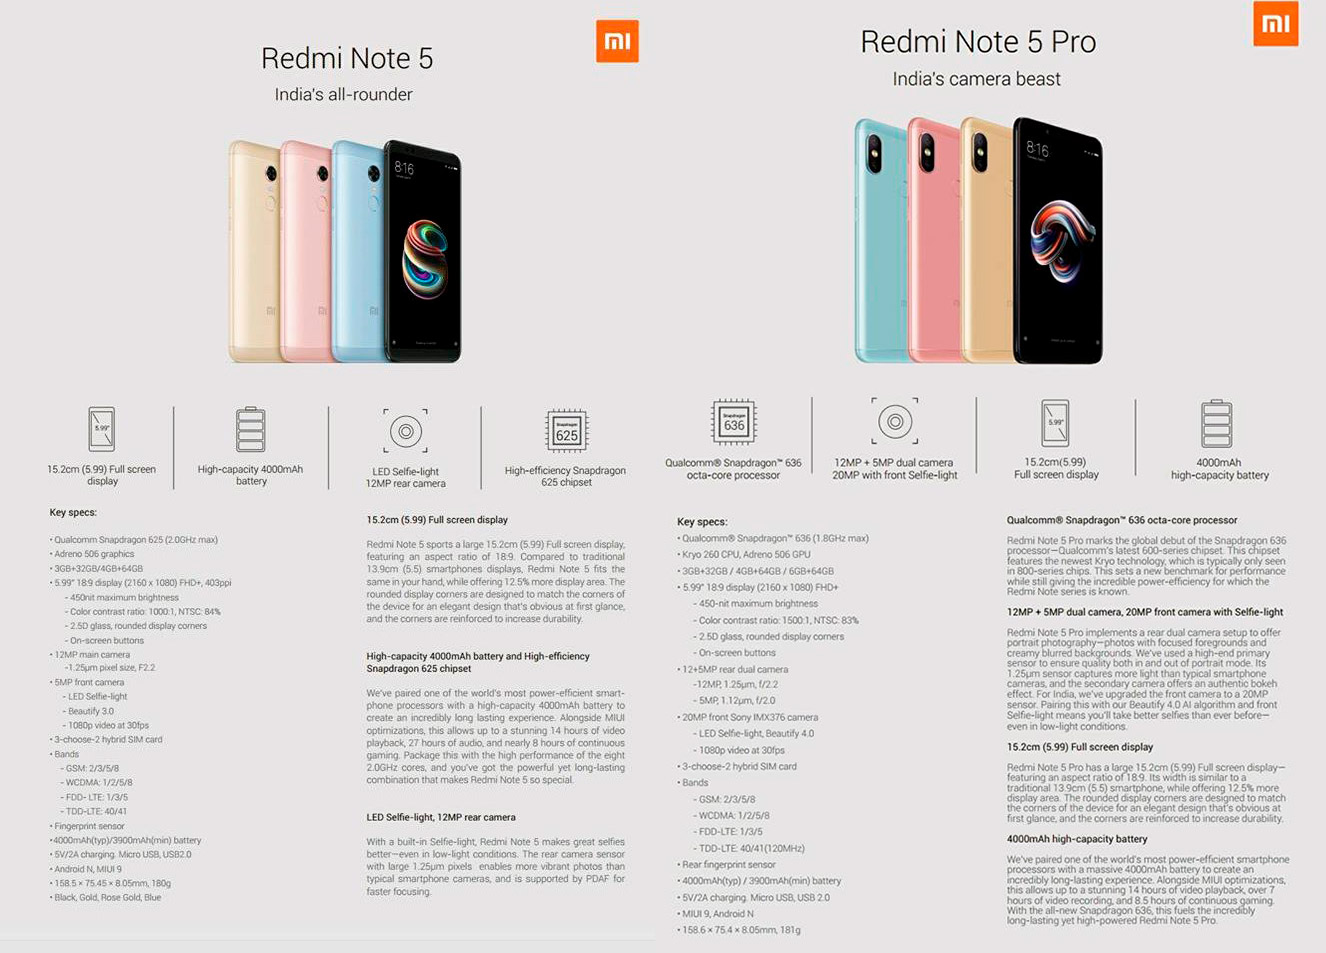 Редми и редми нот в чем разница. Redmi Note 5 Pro Размеры. Редми нот 5 и редми нот 5 про отличия. Redmi Note 5 Pro Pro характеристики. Redmi Note 5 и 5 Pro отличия.